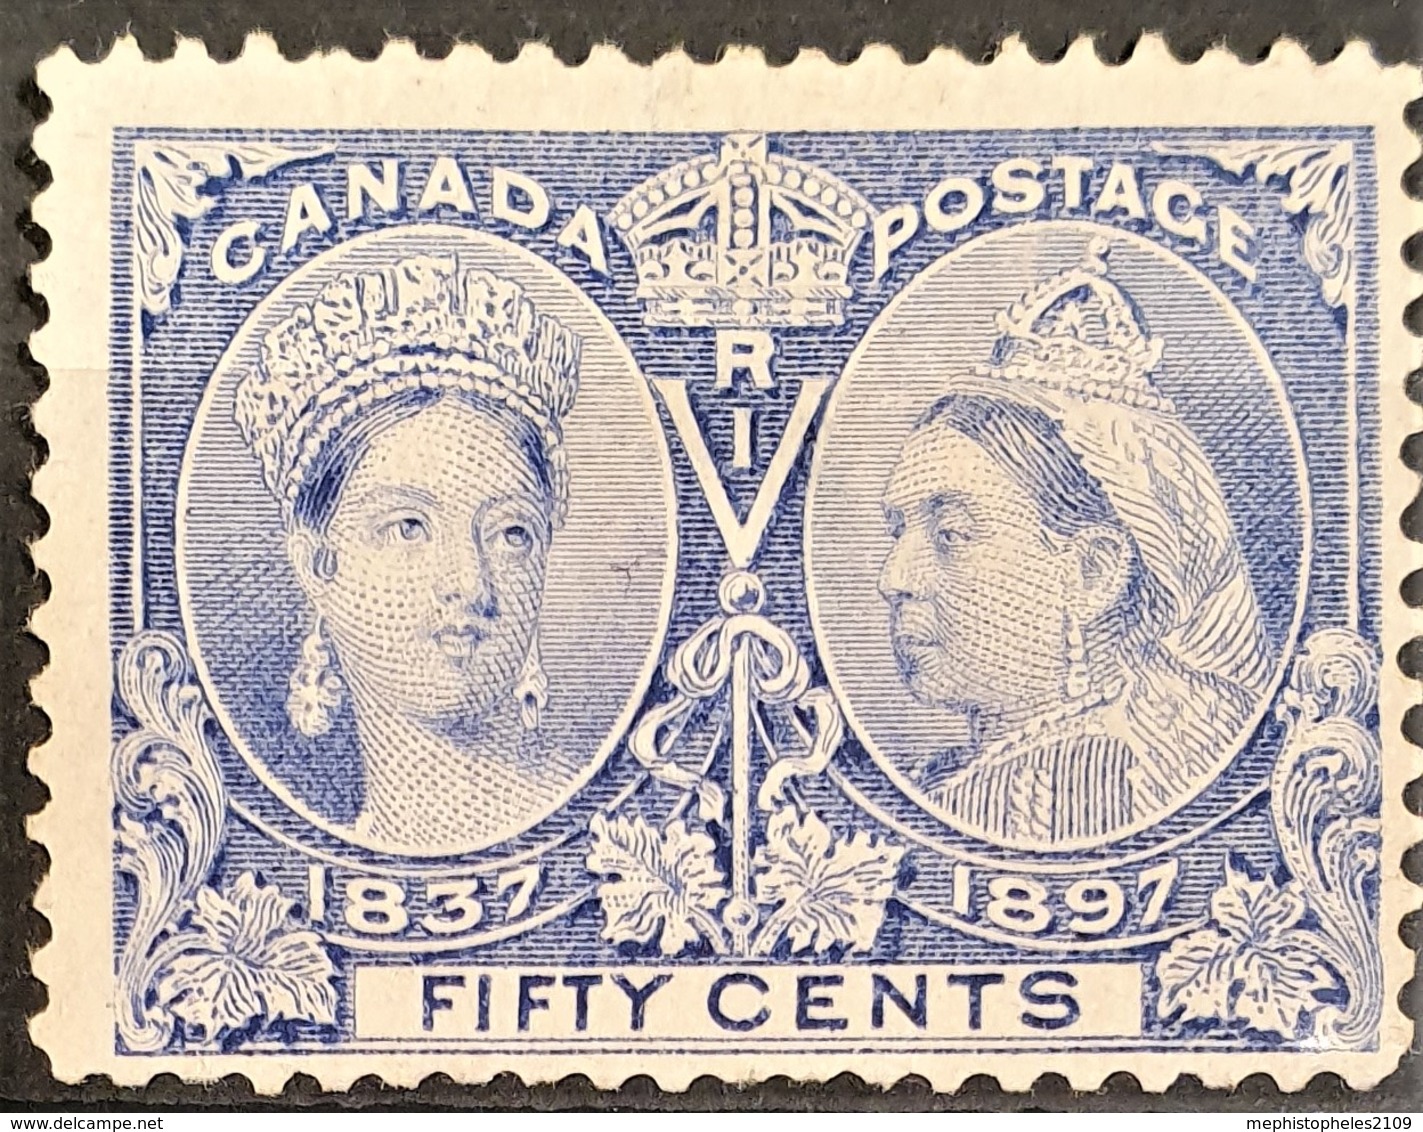 CANADA 1897 - MLH - Sc# 60 - 50c - Jubilee Issue - Neufs